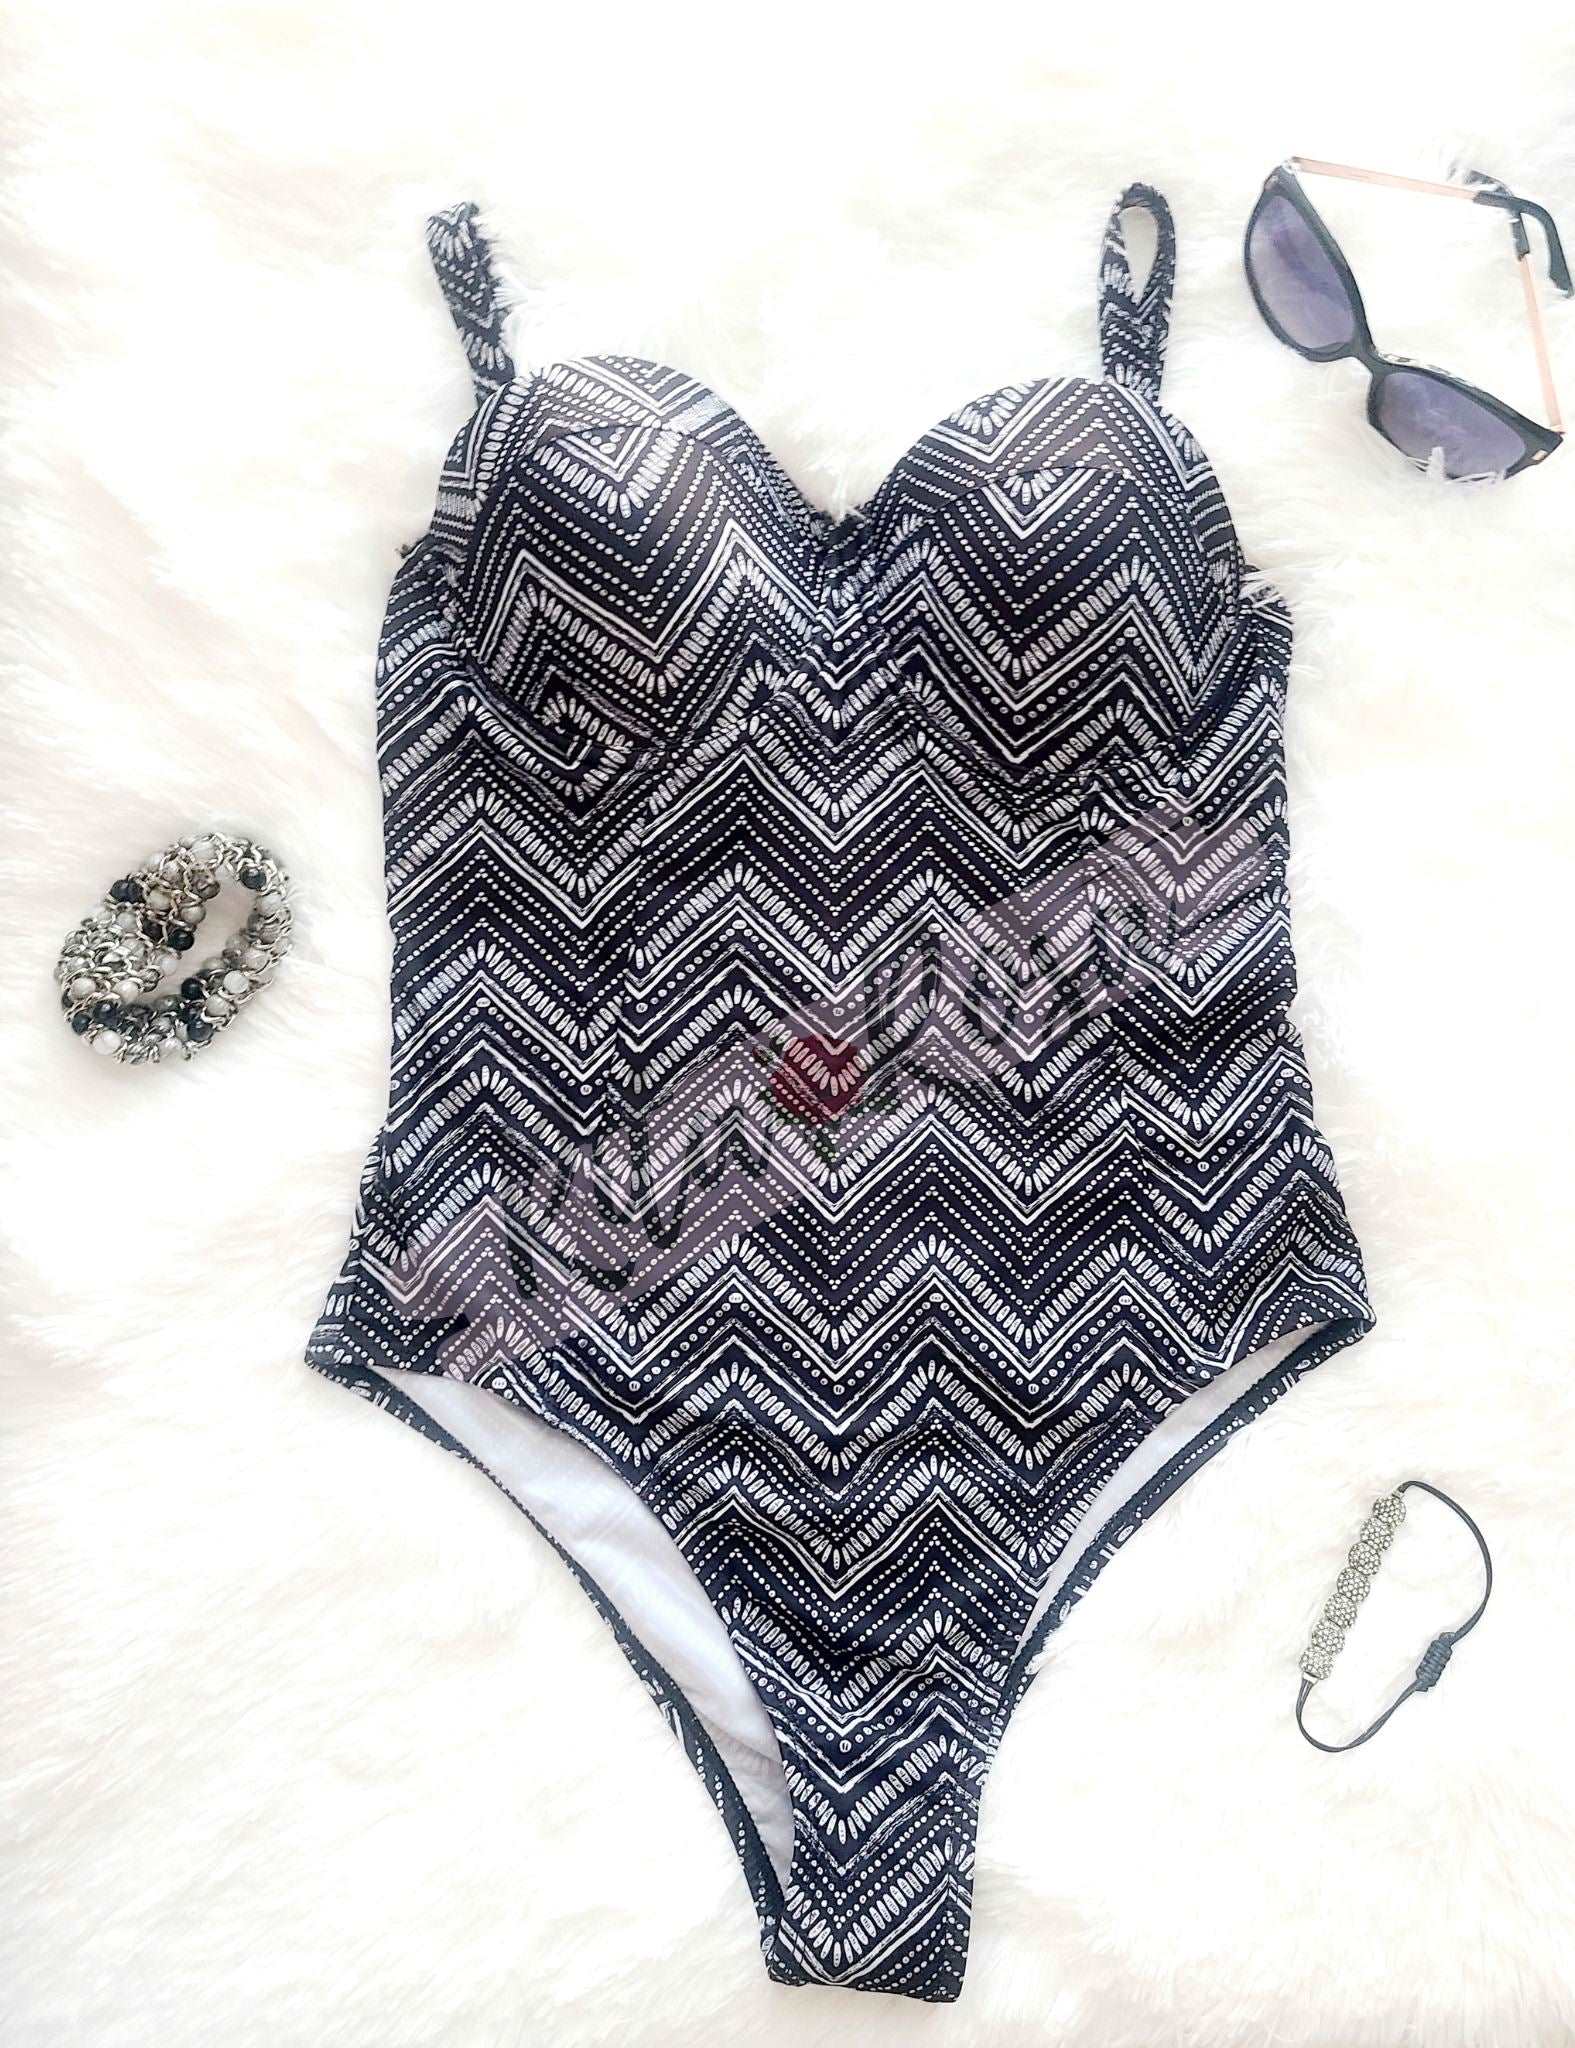 Black & Gray Symmetric One Piece Swimsuit Swimwear Rita Rosa Brazilian Beachwear Medium 85% Polyamide 15% Elastane. Made in Brazil